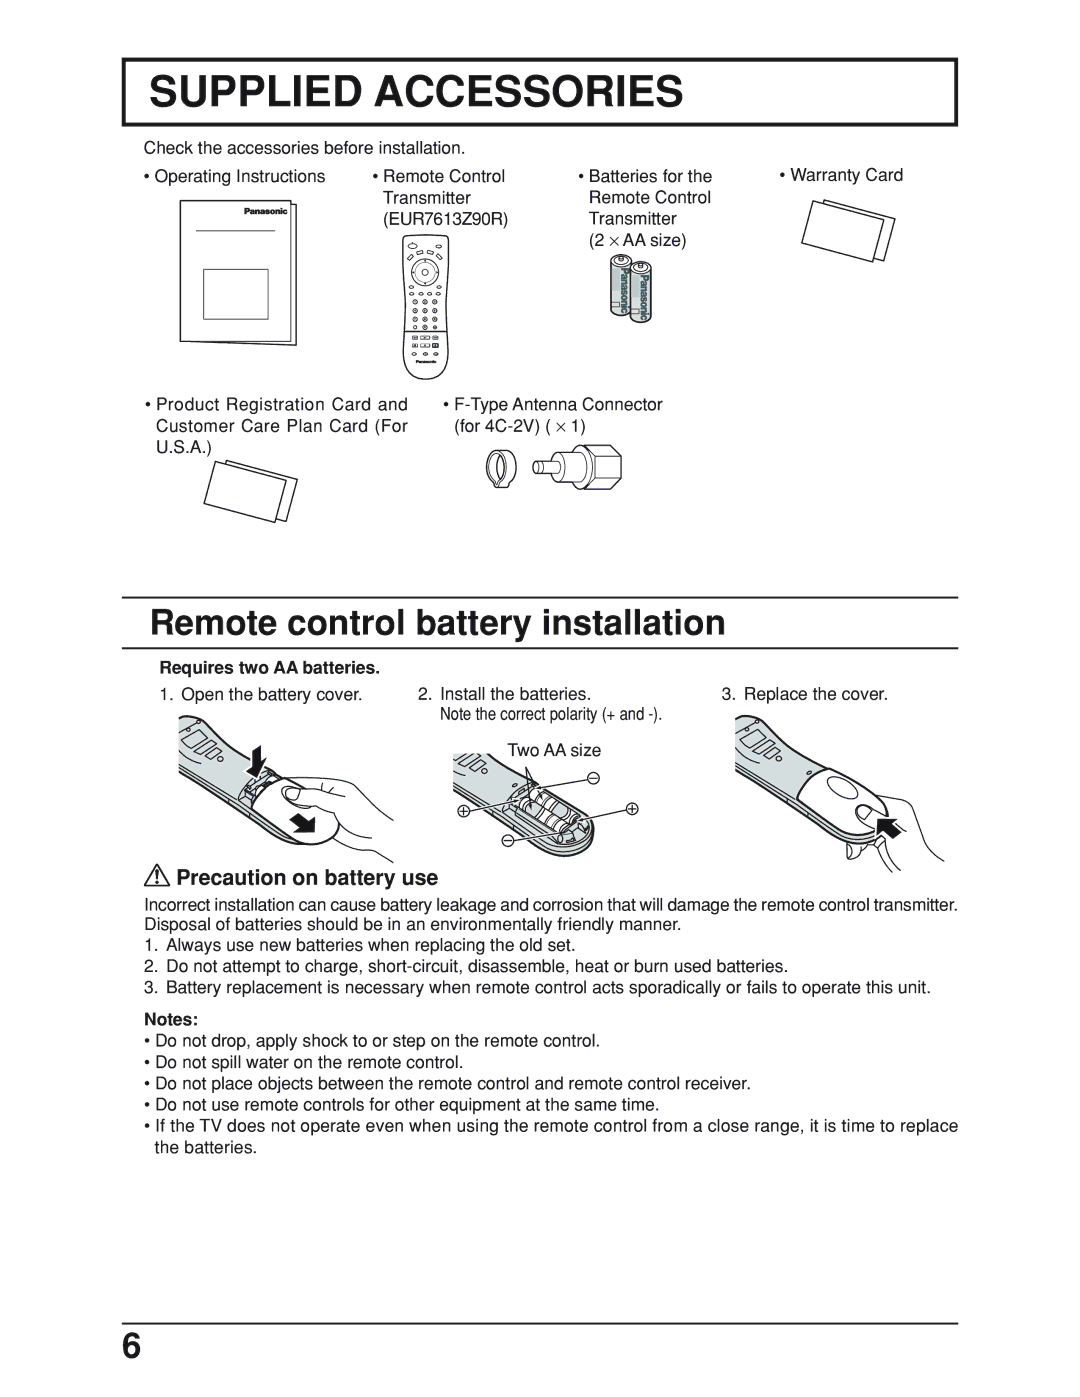 Panasonic TC-19LE50, TC 19LX50 manual Supplied Accessories, Remote control battery installation, Precaution on battery use 